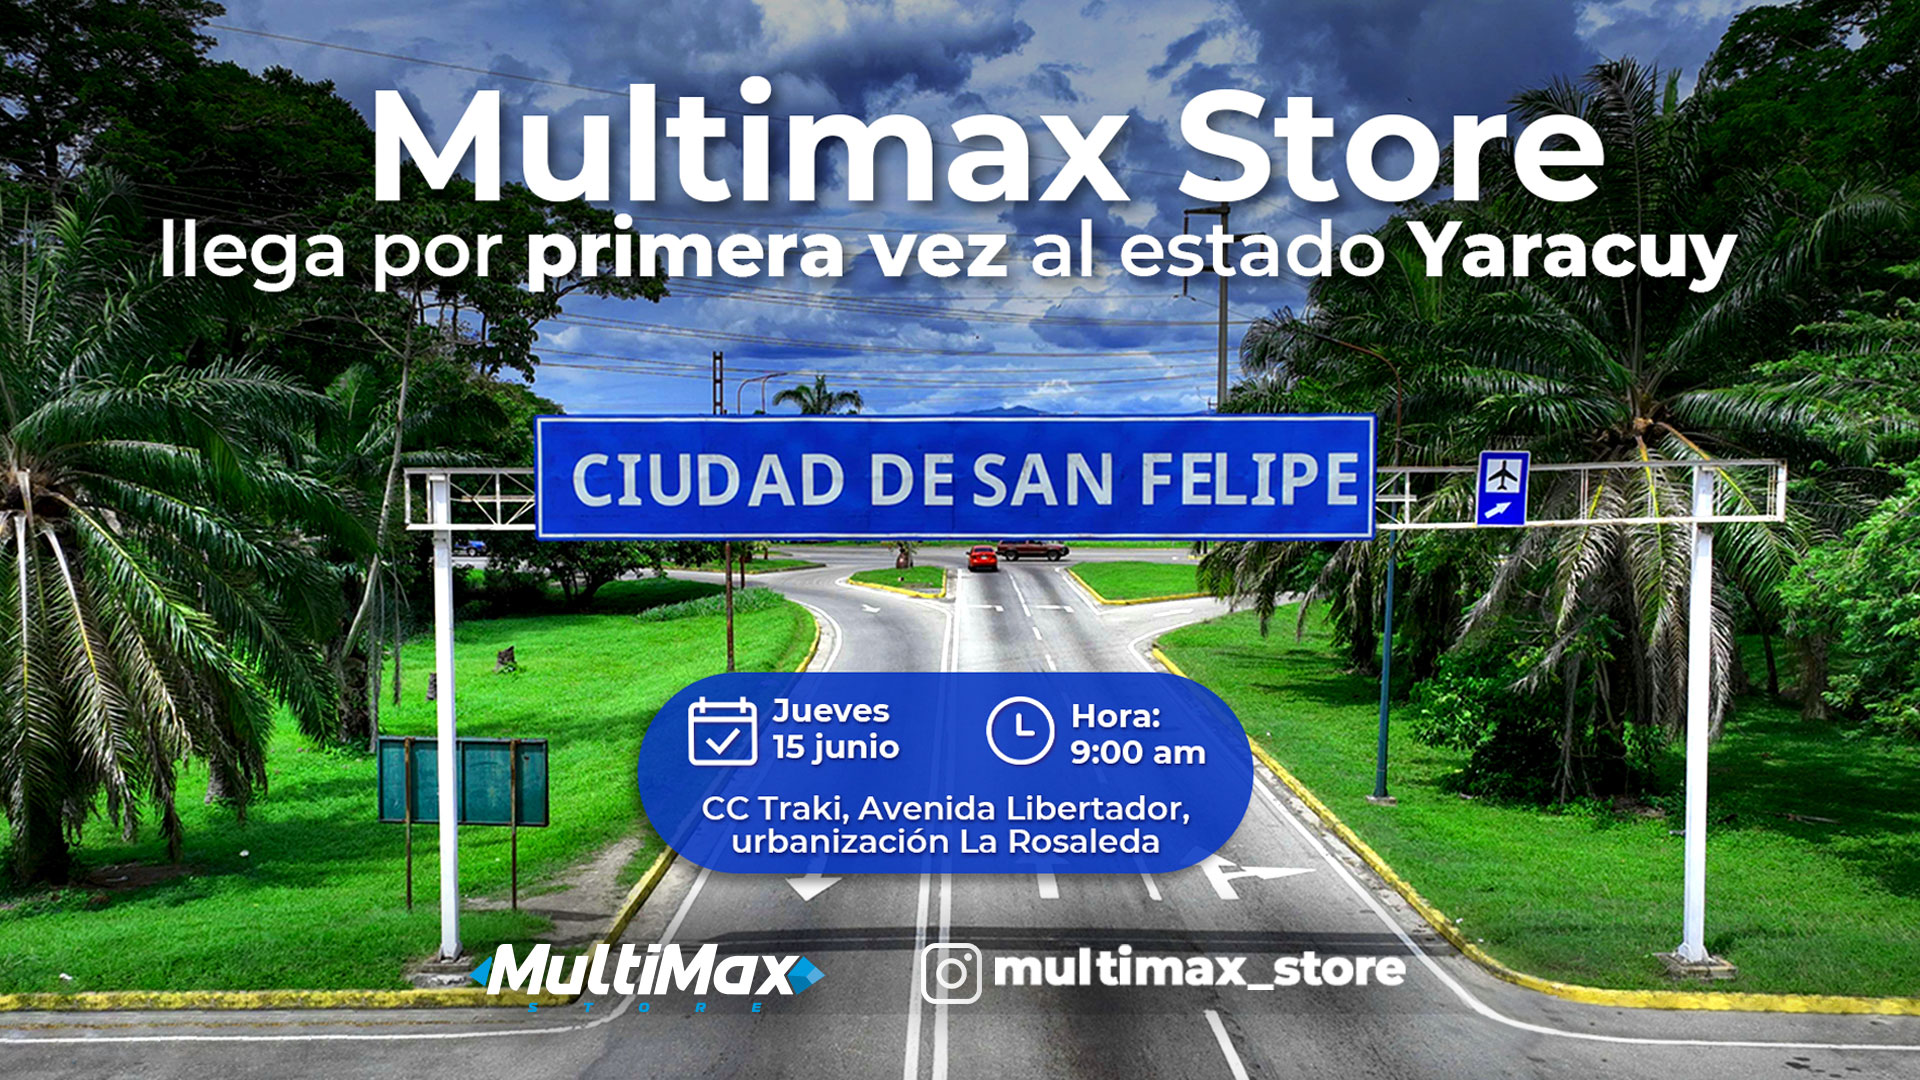 Multimax Store Yaracuy - Nasar Dagga presidente de Multimax Store